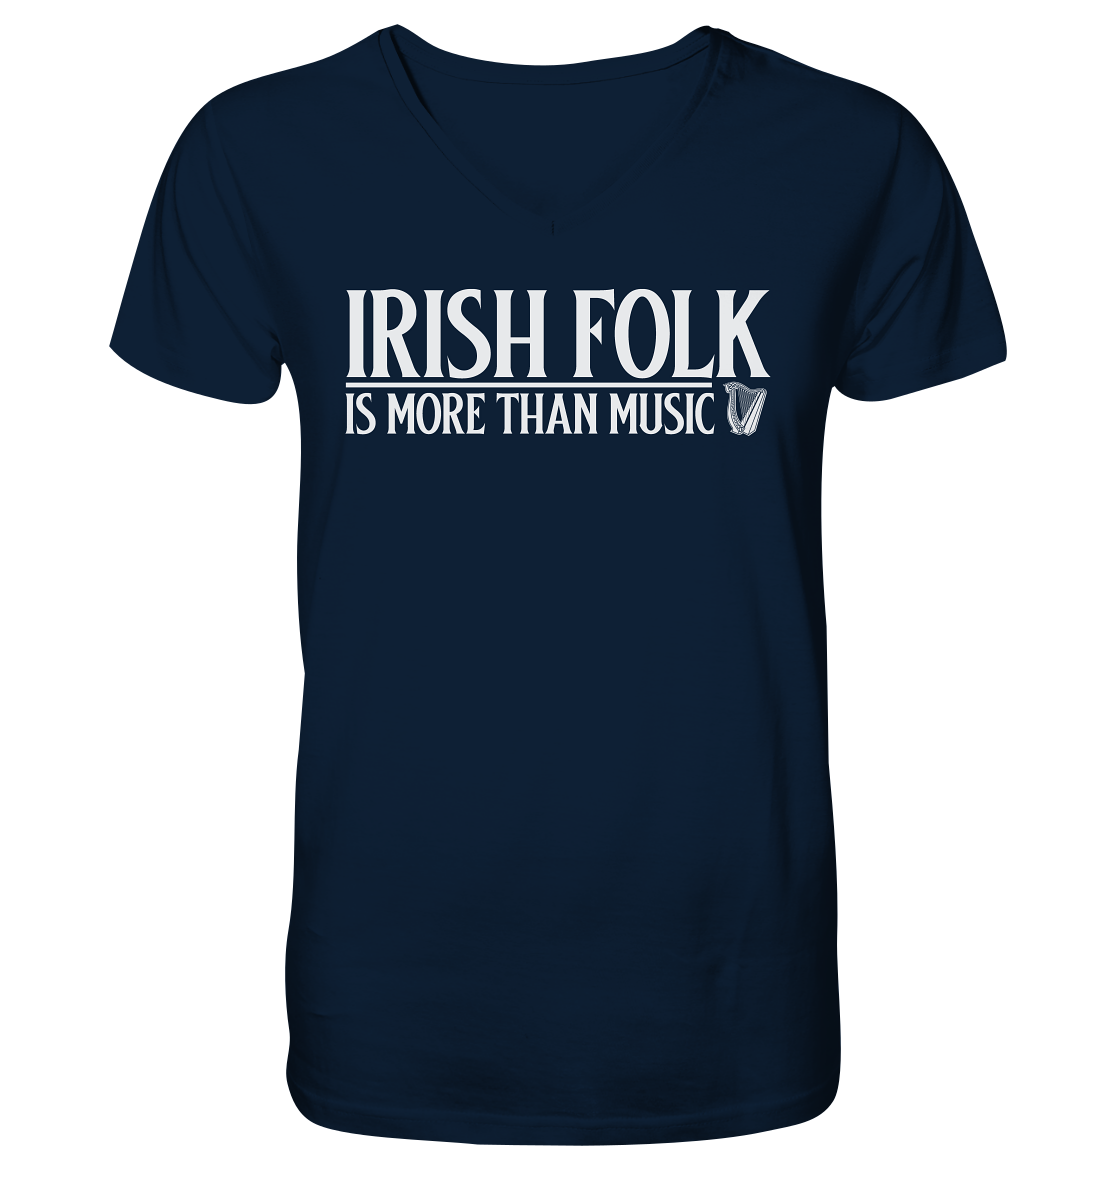 Irish Folk "Is More Than Music" - V-Neck Shirt